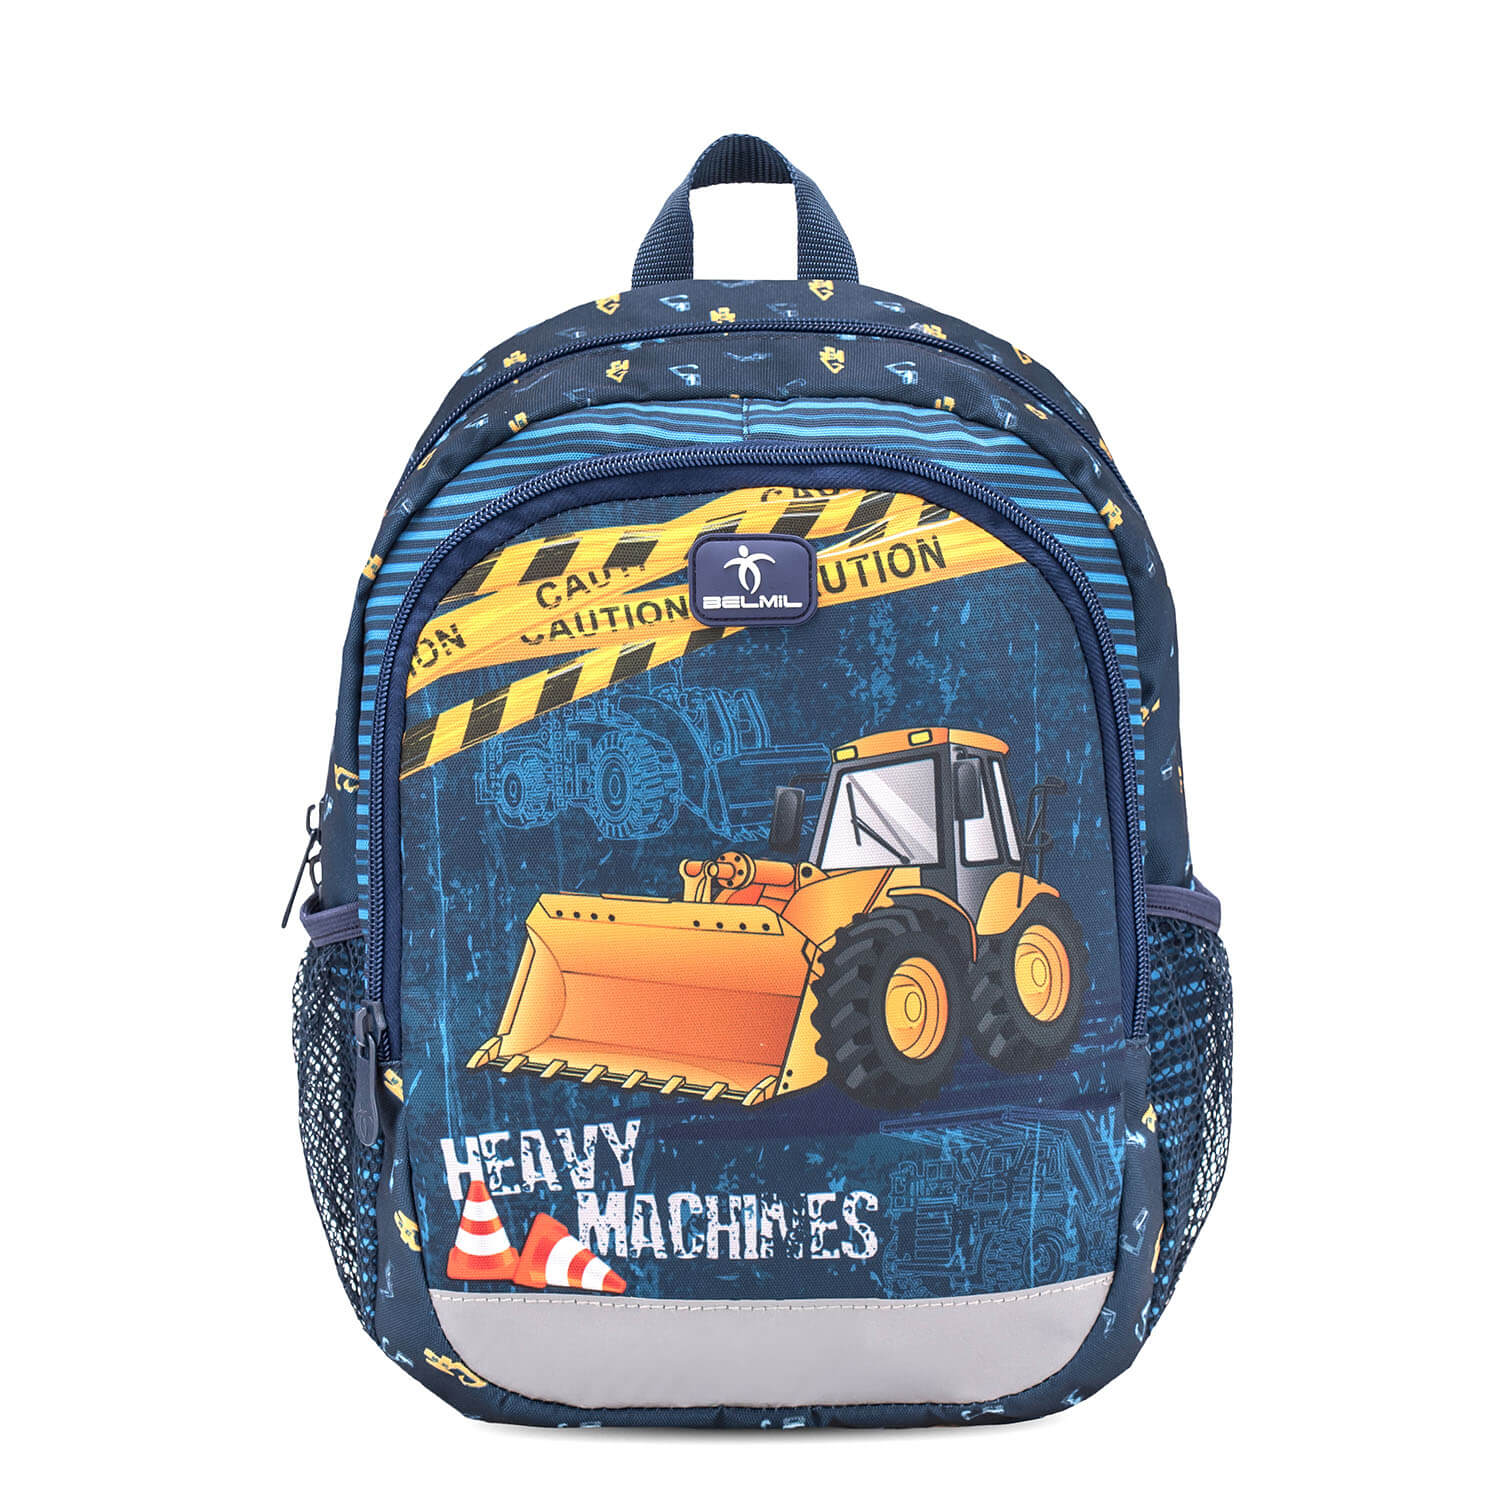 Kiddy Plus Heavy Machinery Kindergarten Bag